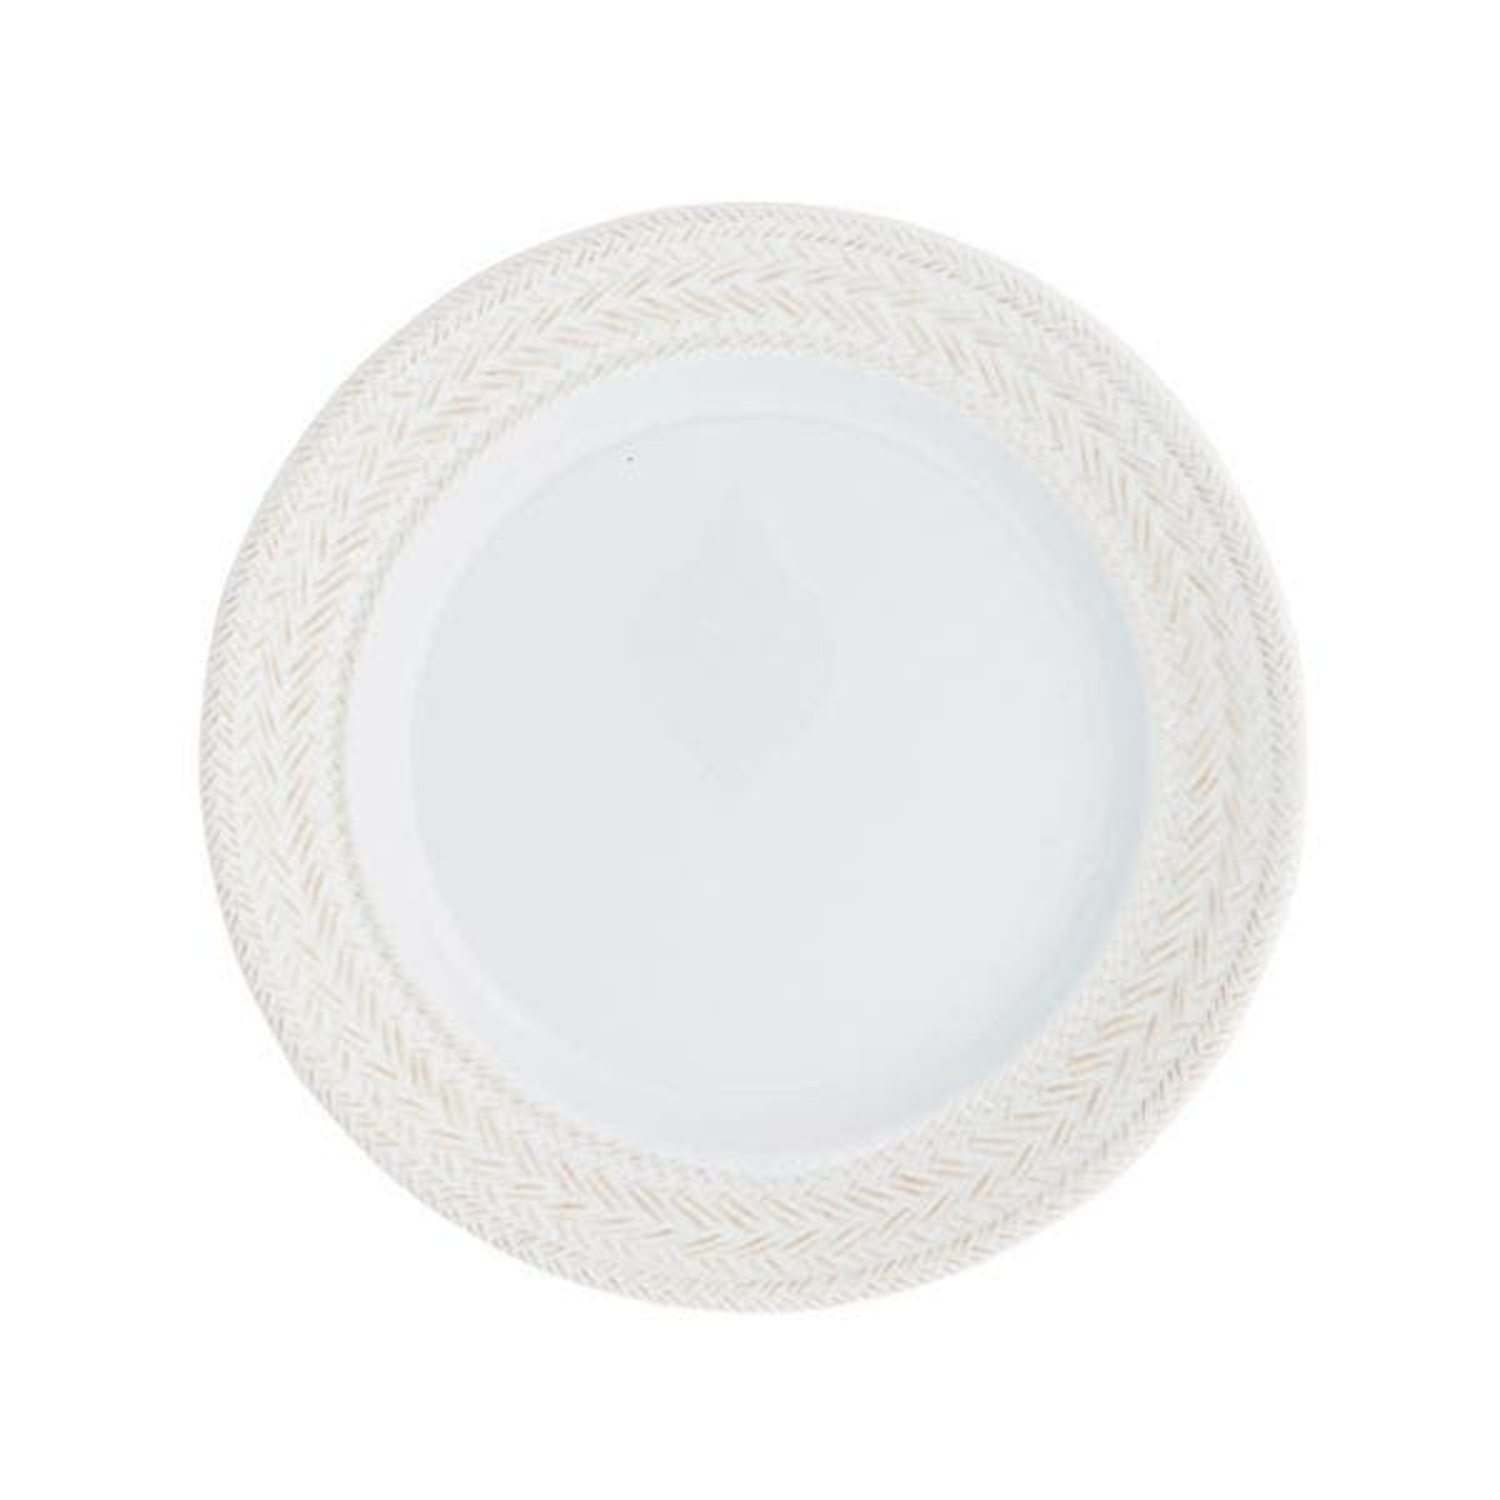 Table mangeoire Blanche - Jardiprotec